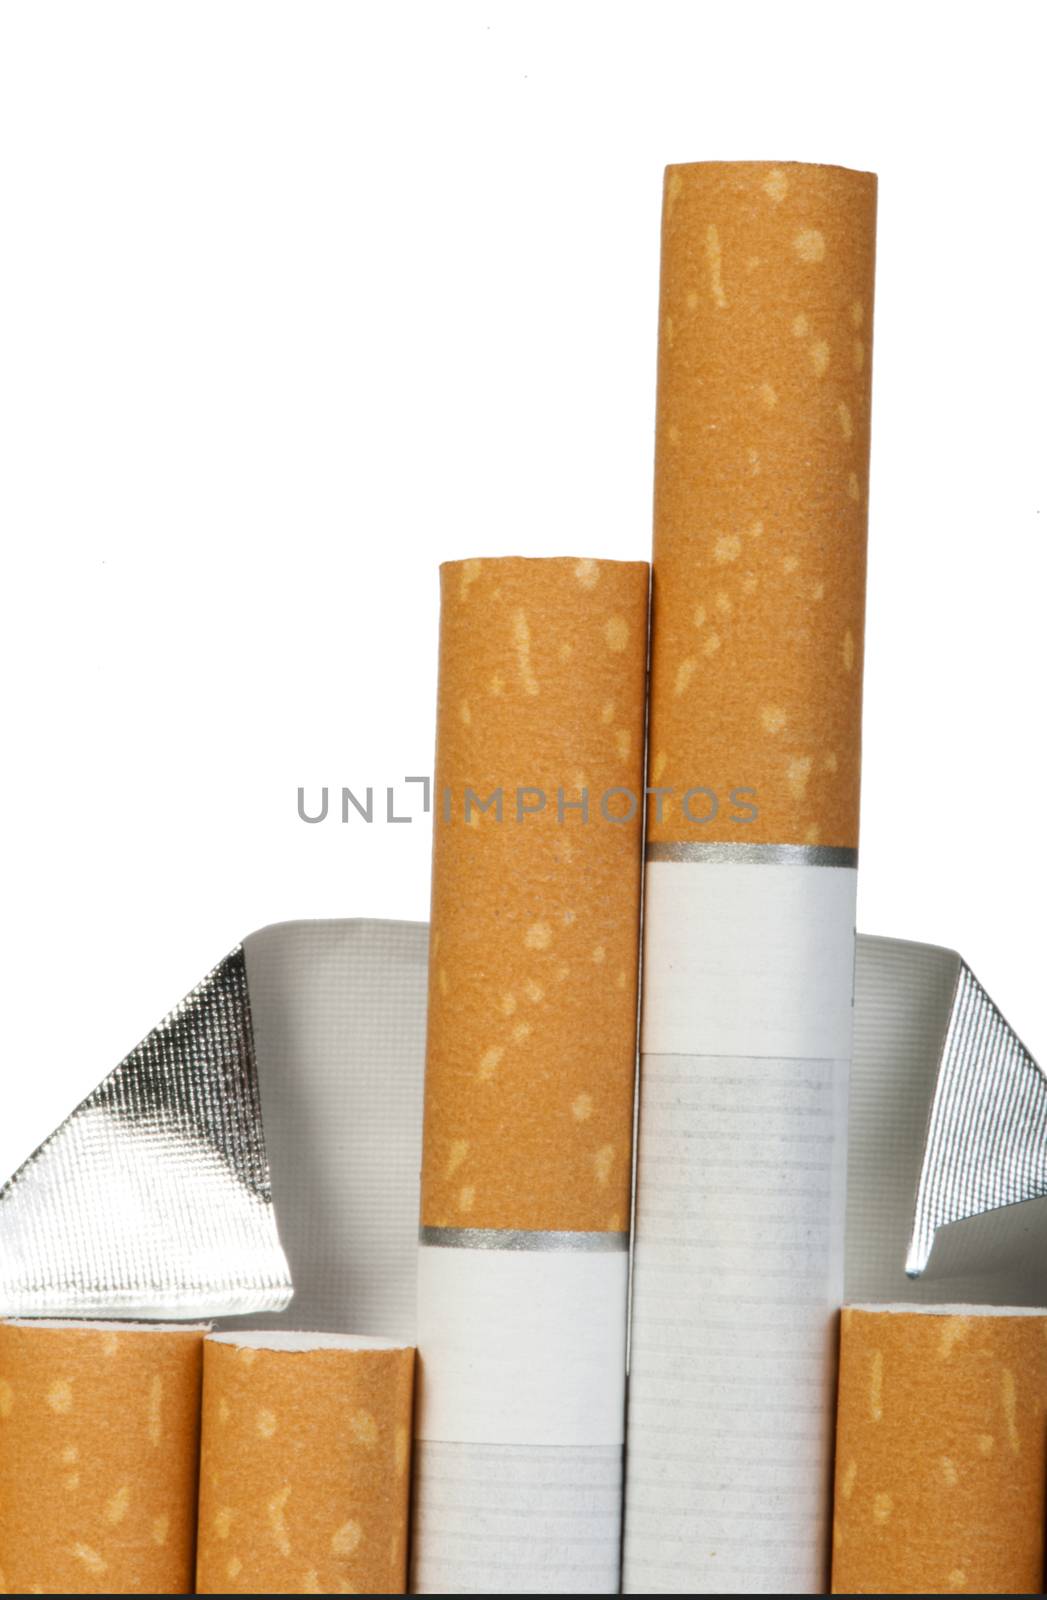 Pack of cigarettes. White isolated studio shot